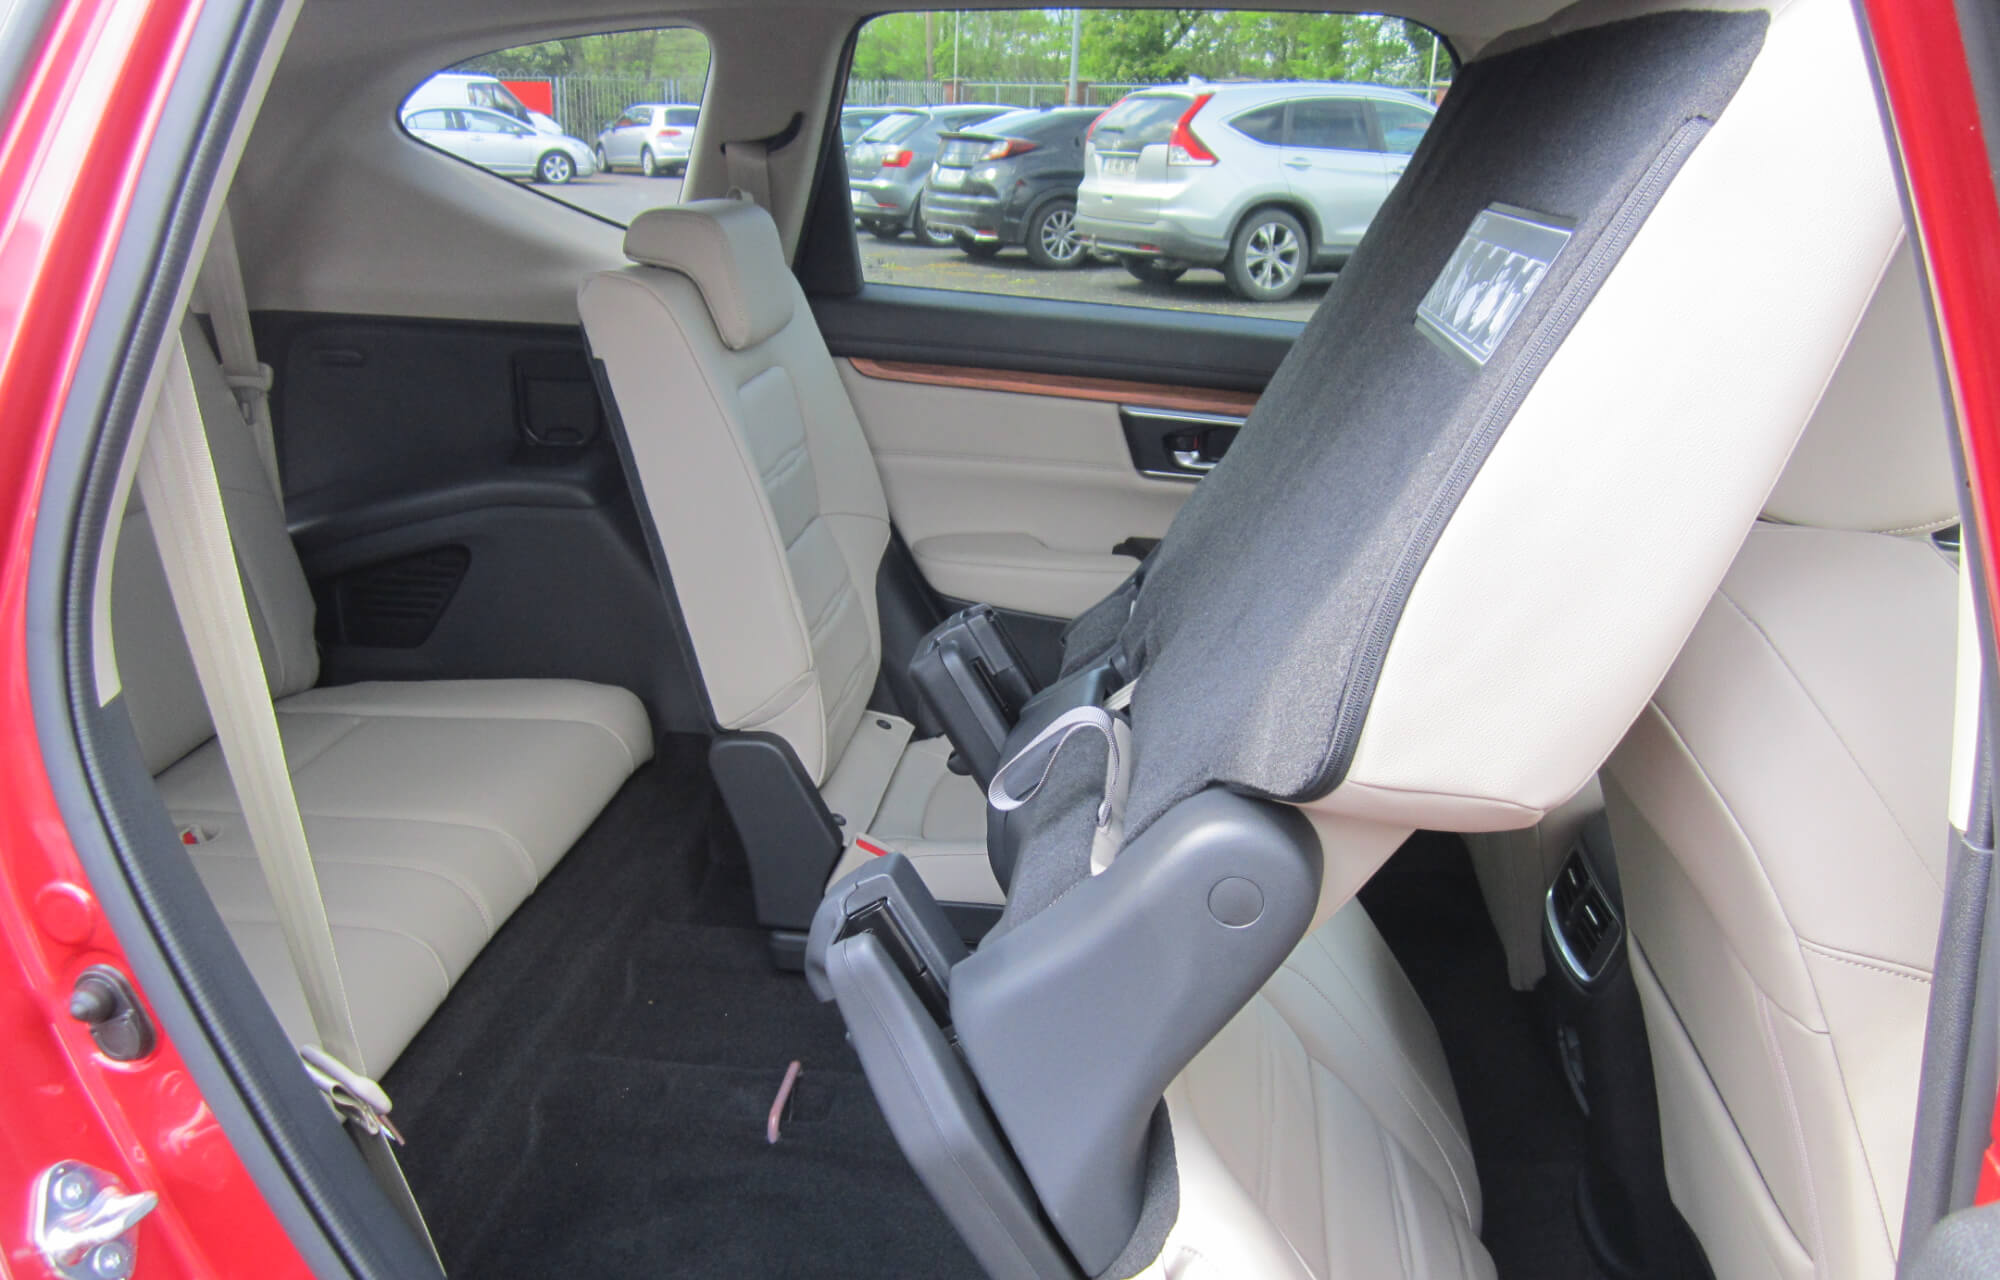 2019 CR-V 1.5 i-VTEC Elegance 7-Seater AWD now available at John Adams Car Sales